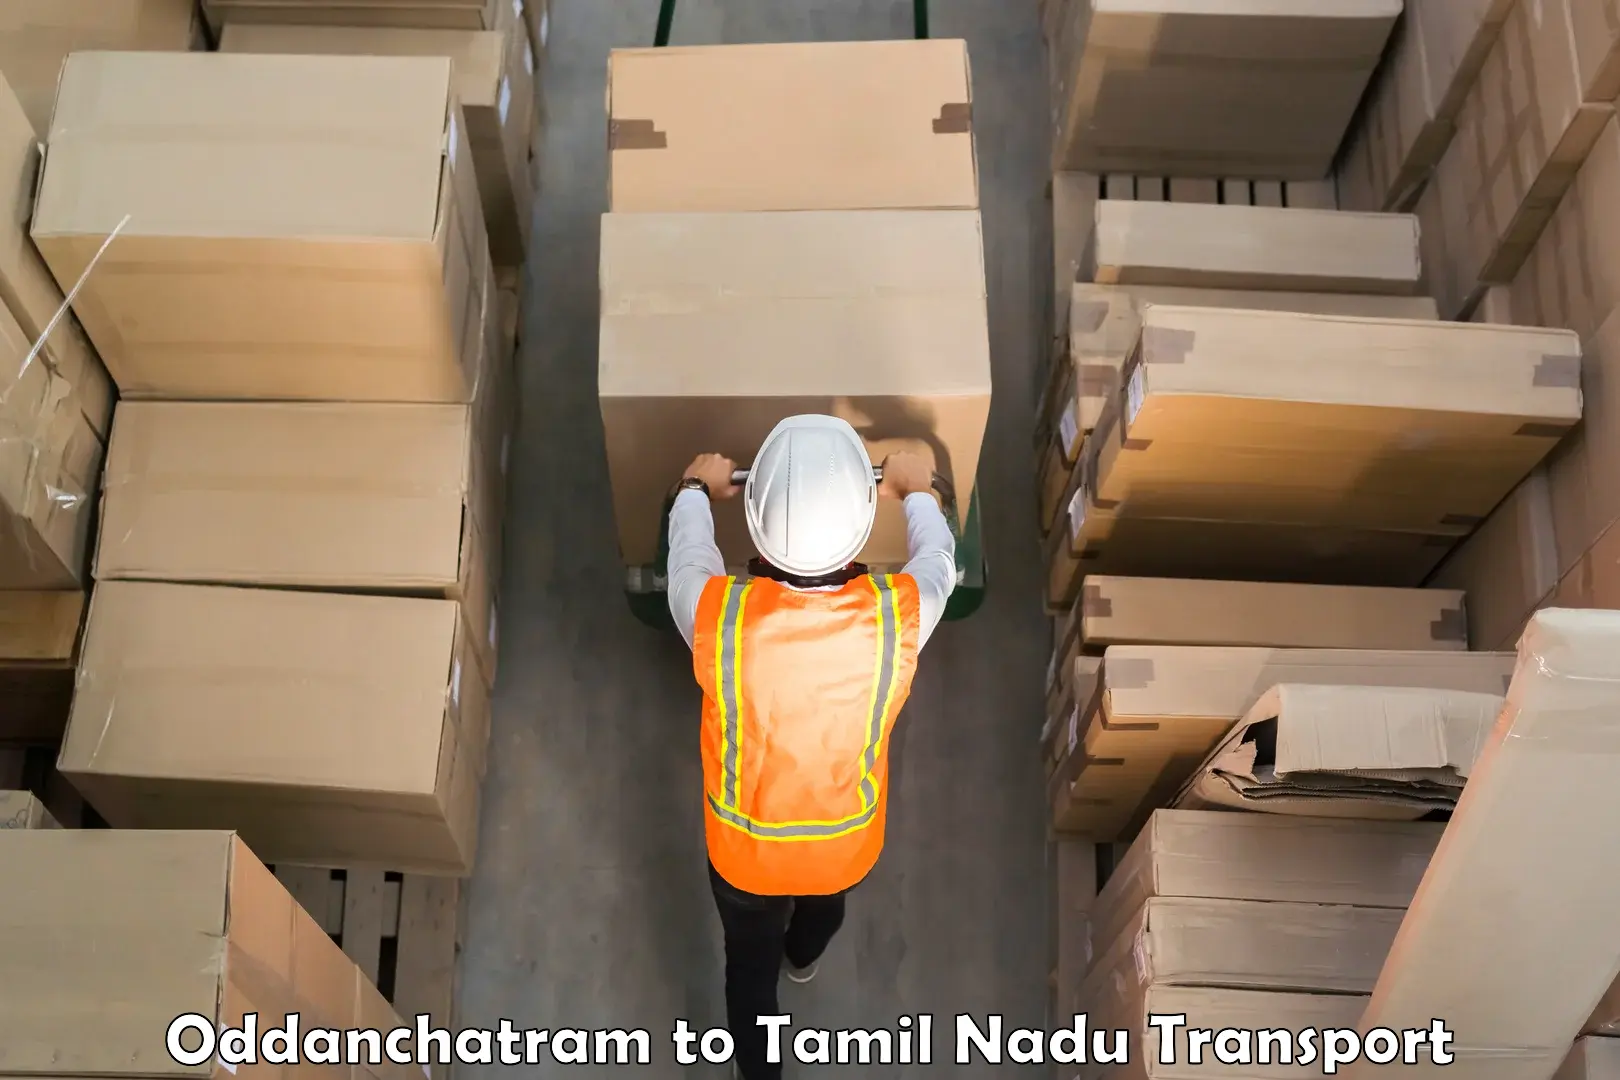 Truck transport companies in India Oddanchatram to Chennai Port